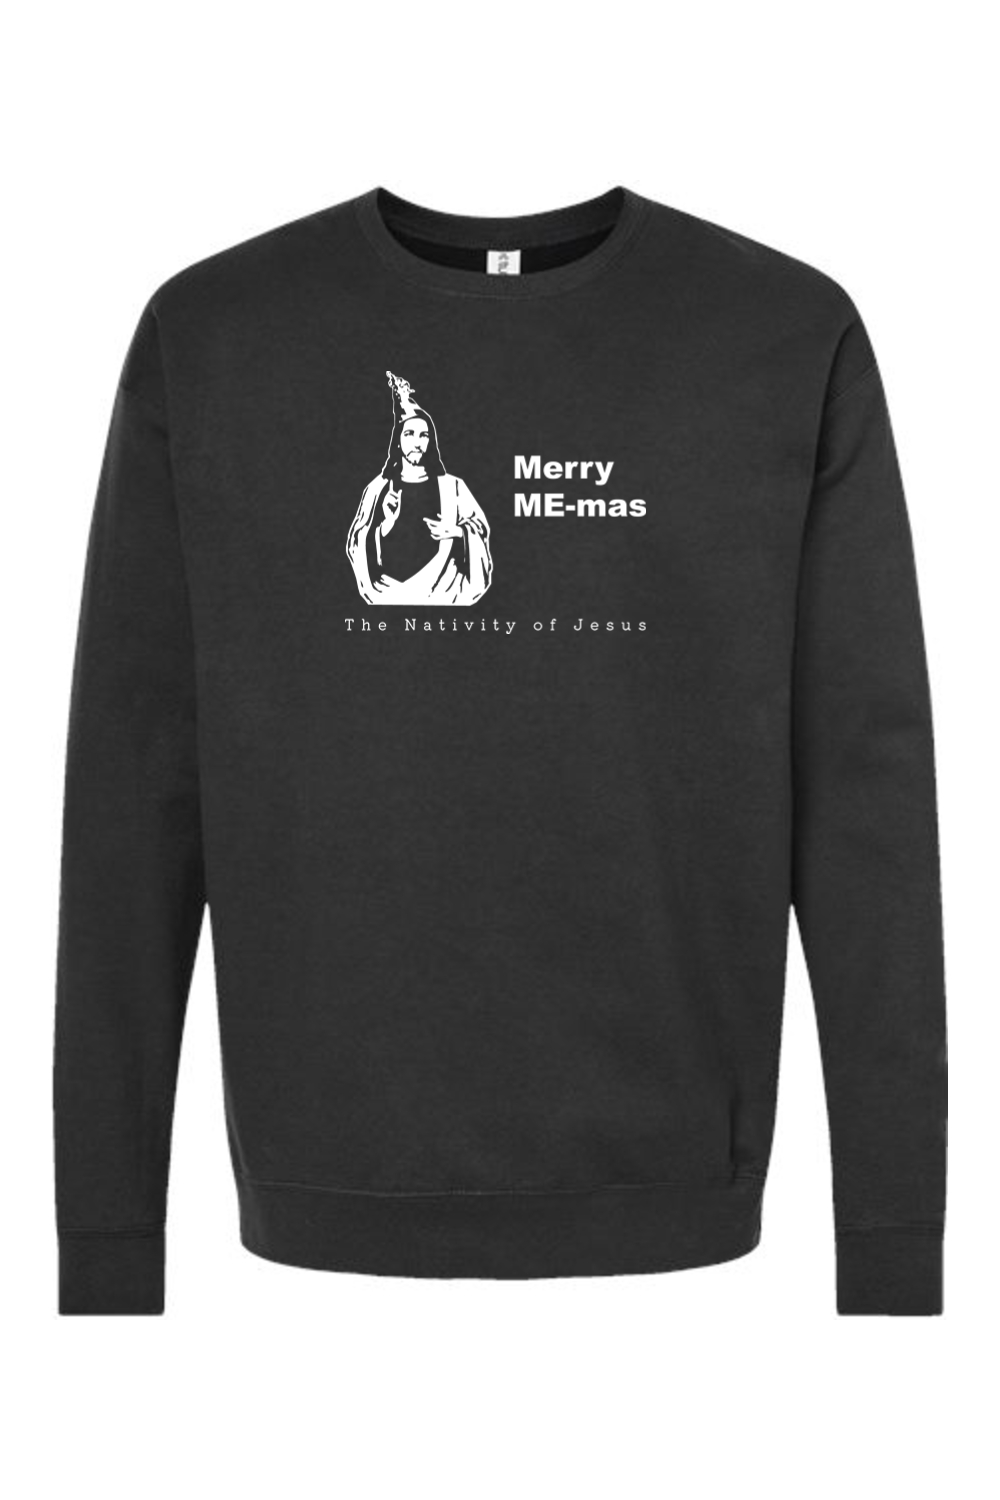 Merry ME-mas - The Nativity of Jesus Crewneck Sweatshirt